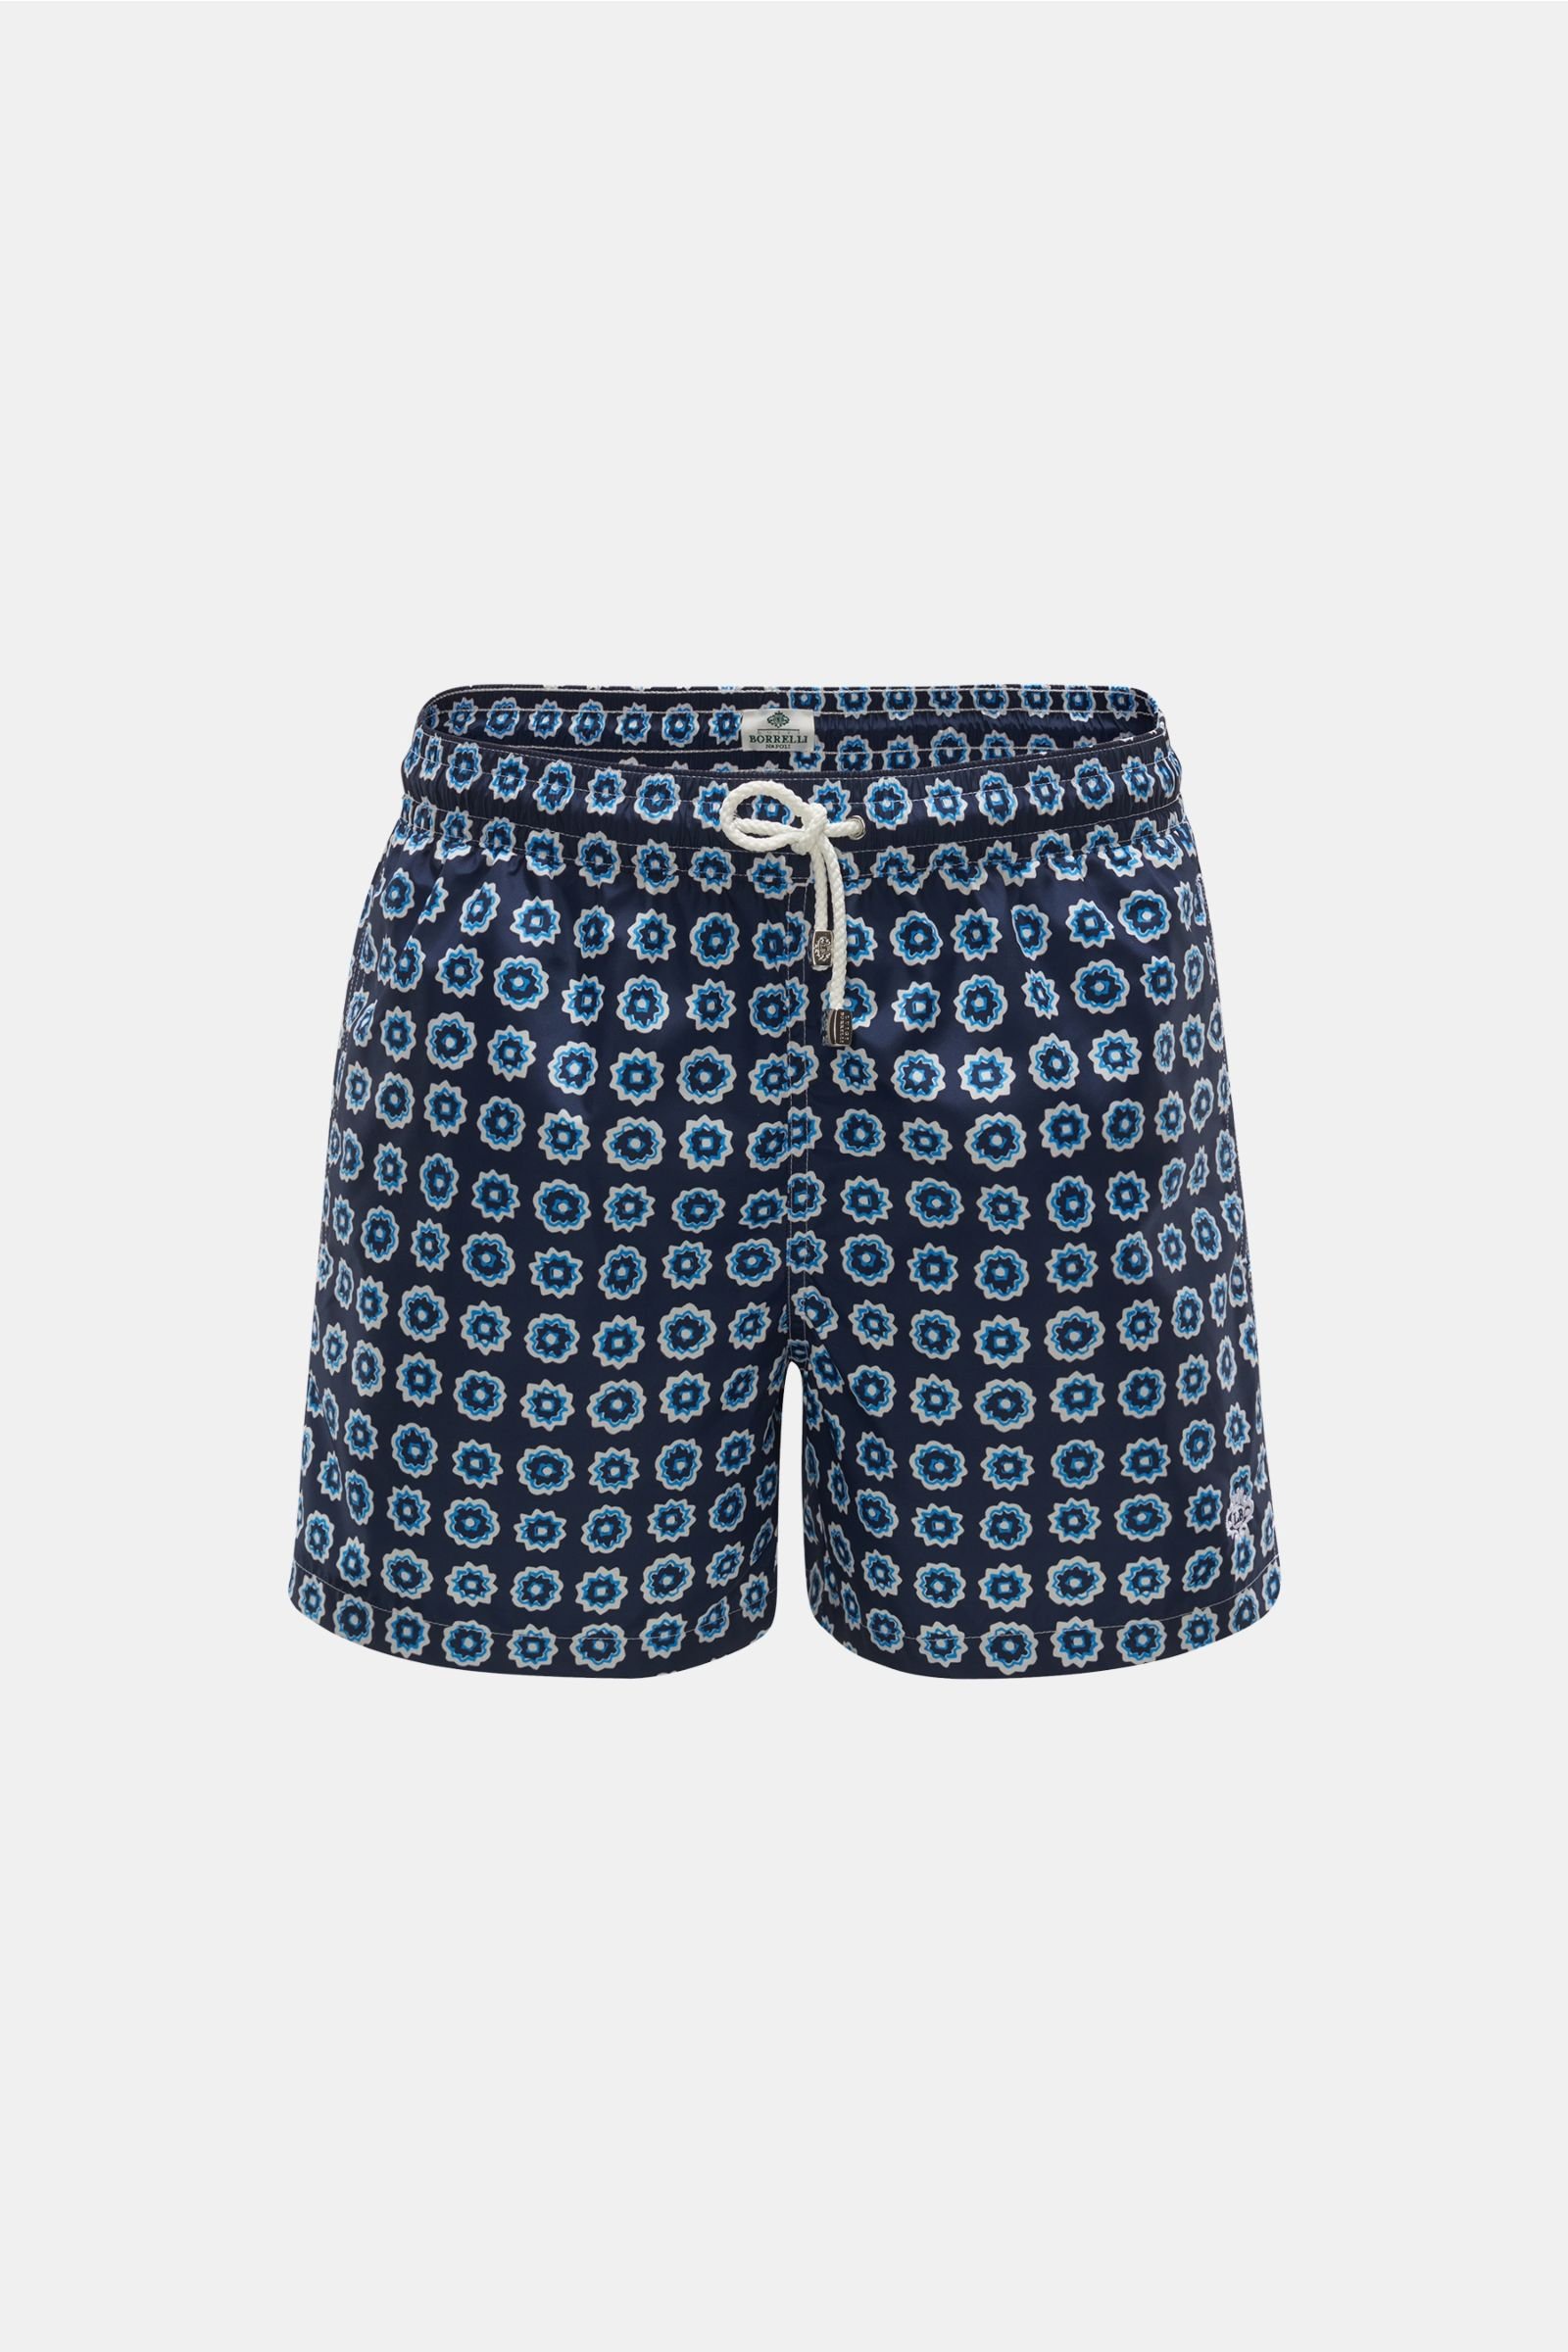 Swim shorts navy patterned